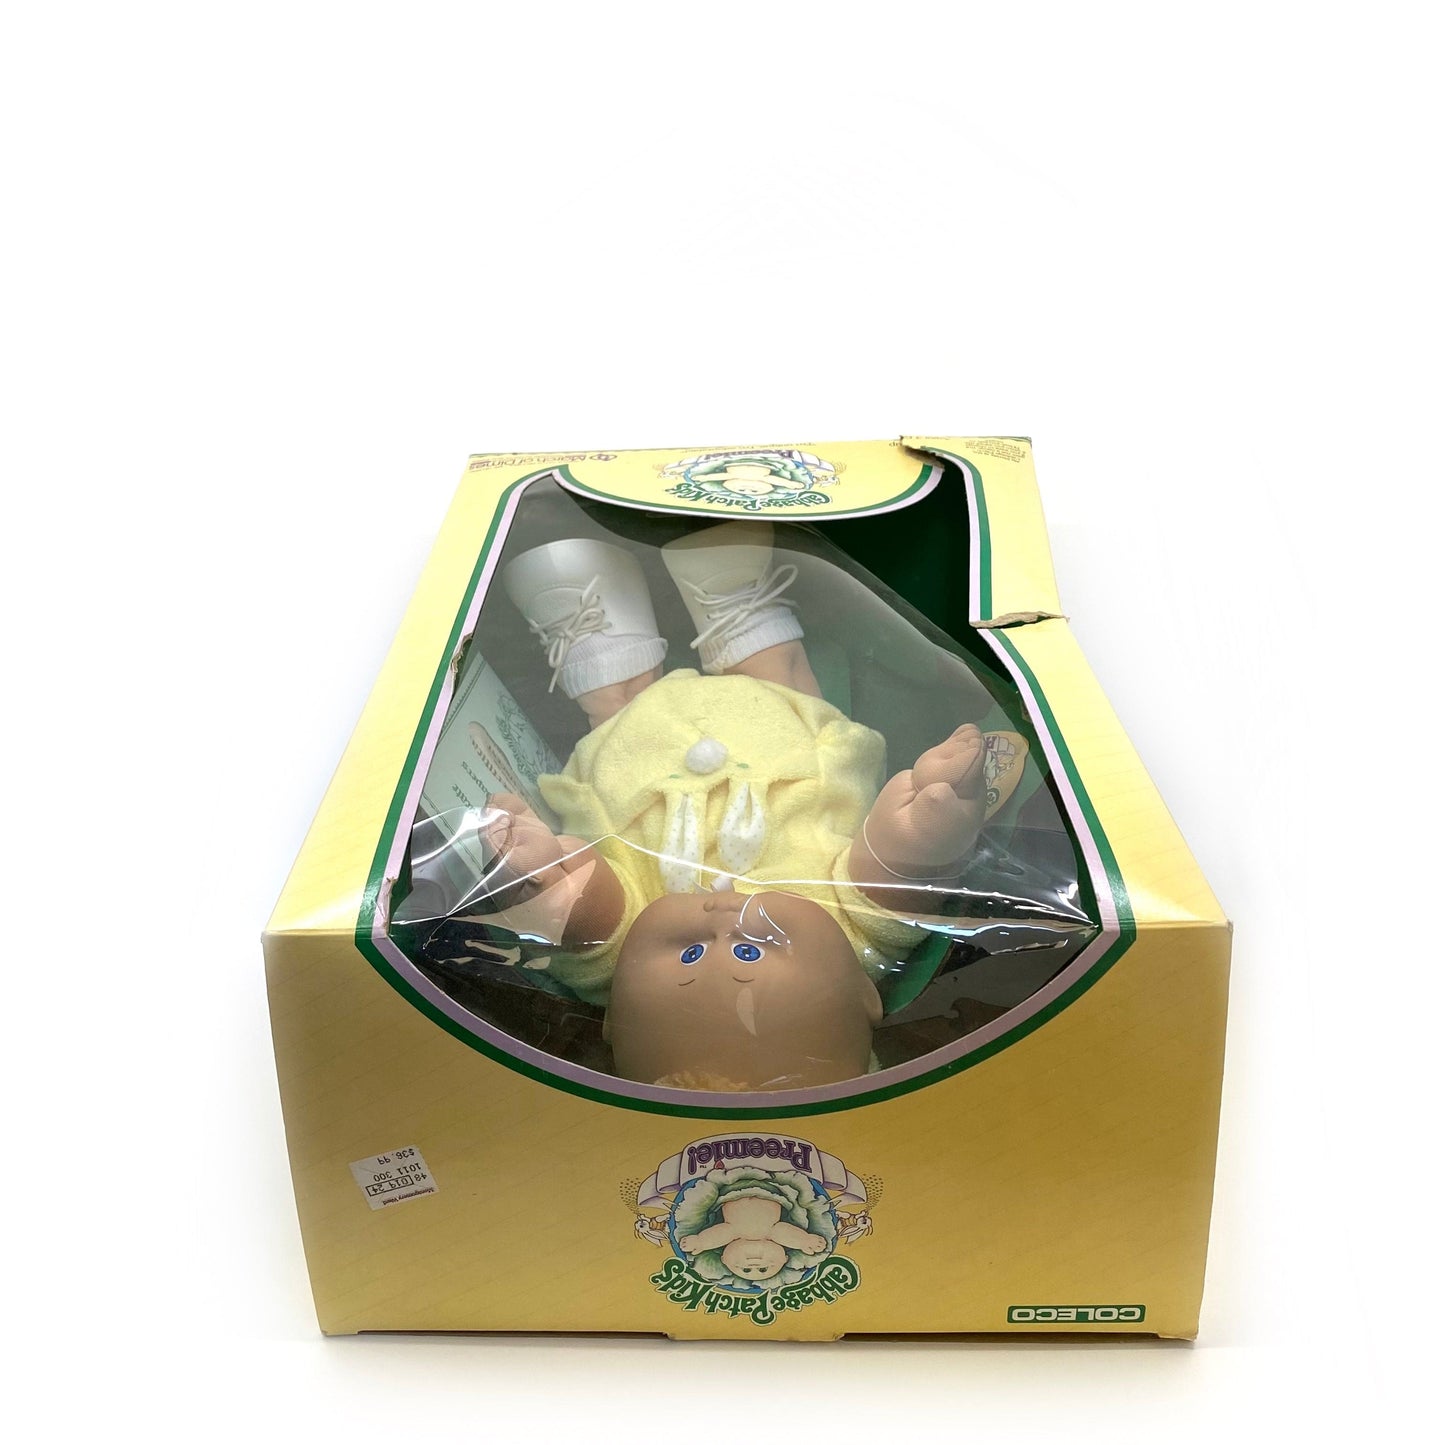 Cabbage Patch Kids | Preemie! Boy Doll "Peter Vincent" 1984 | Vintage in Original Box